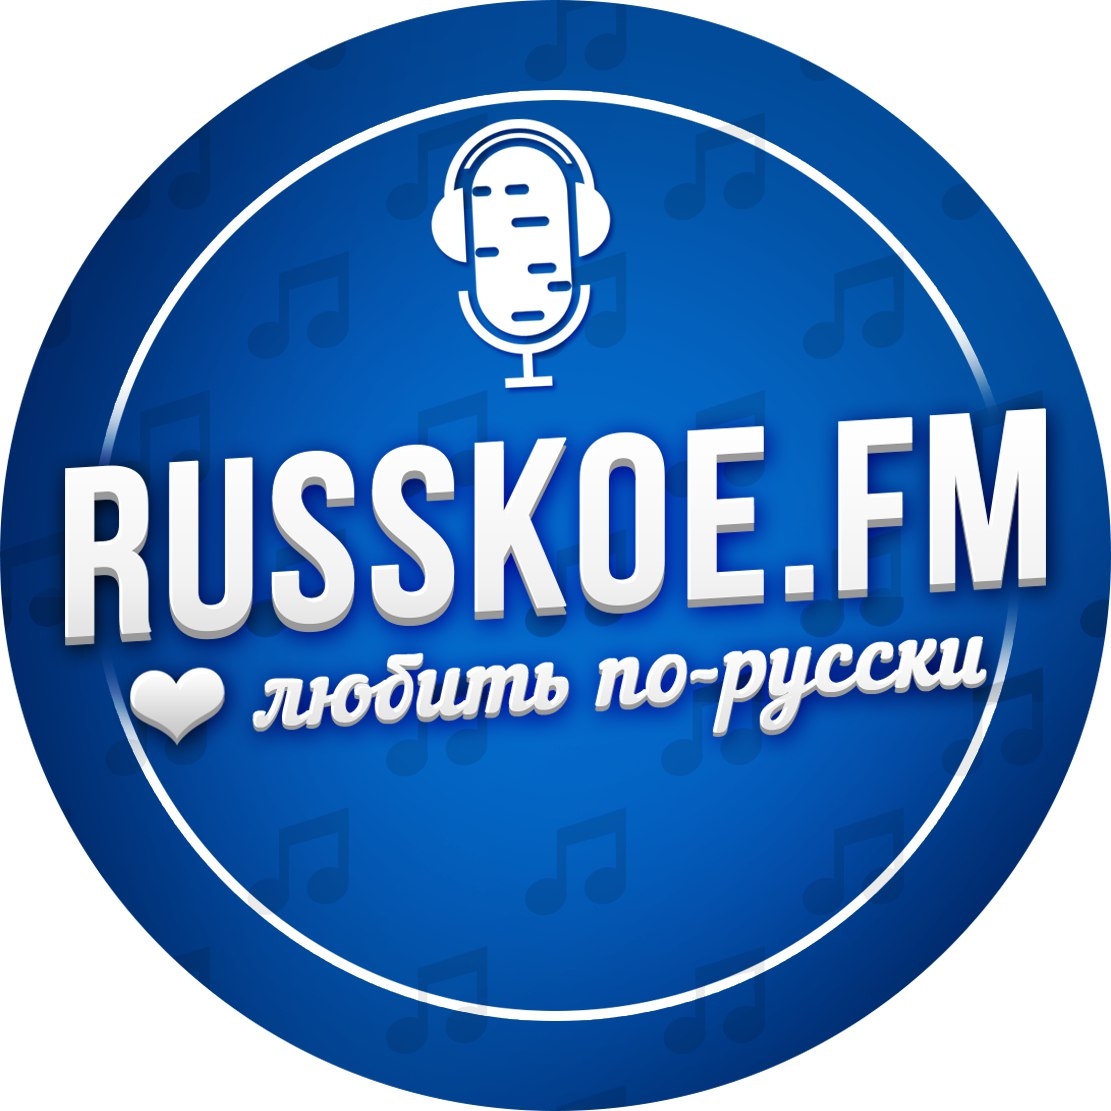 Русское радио москва фм